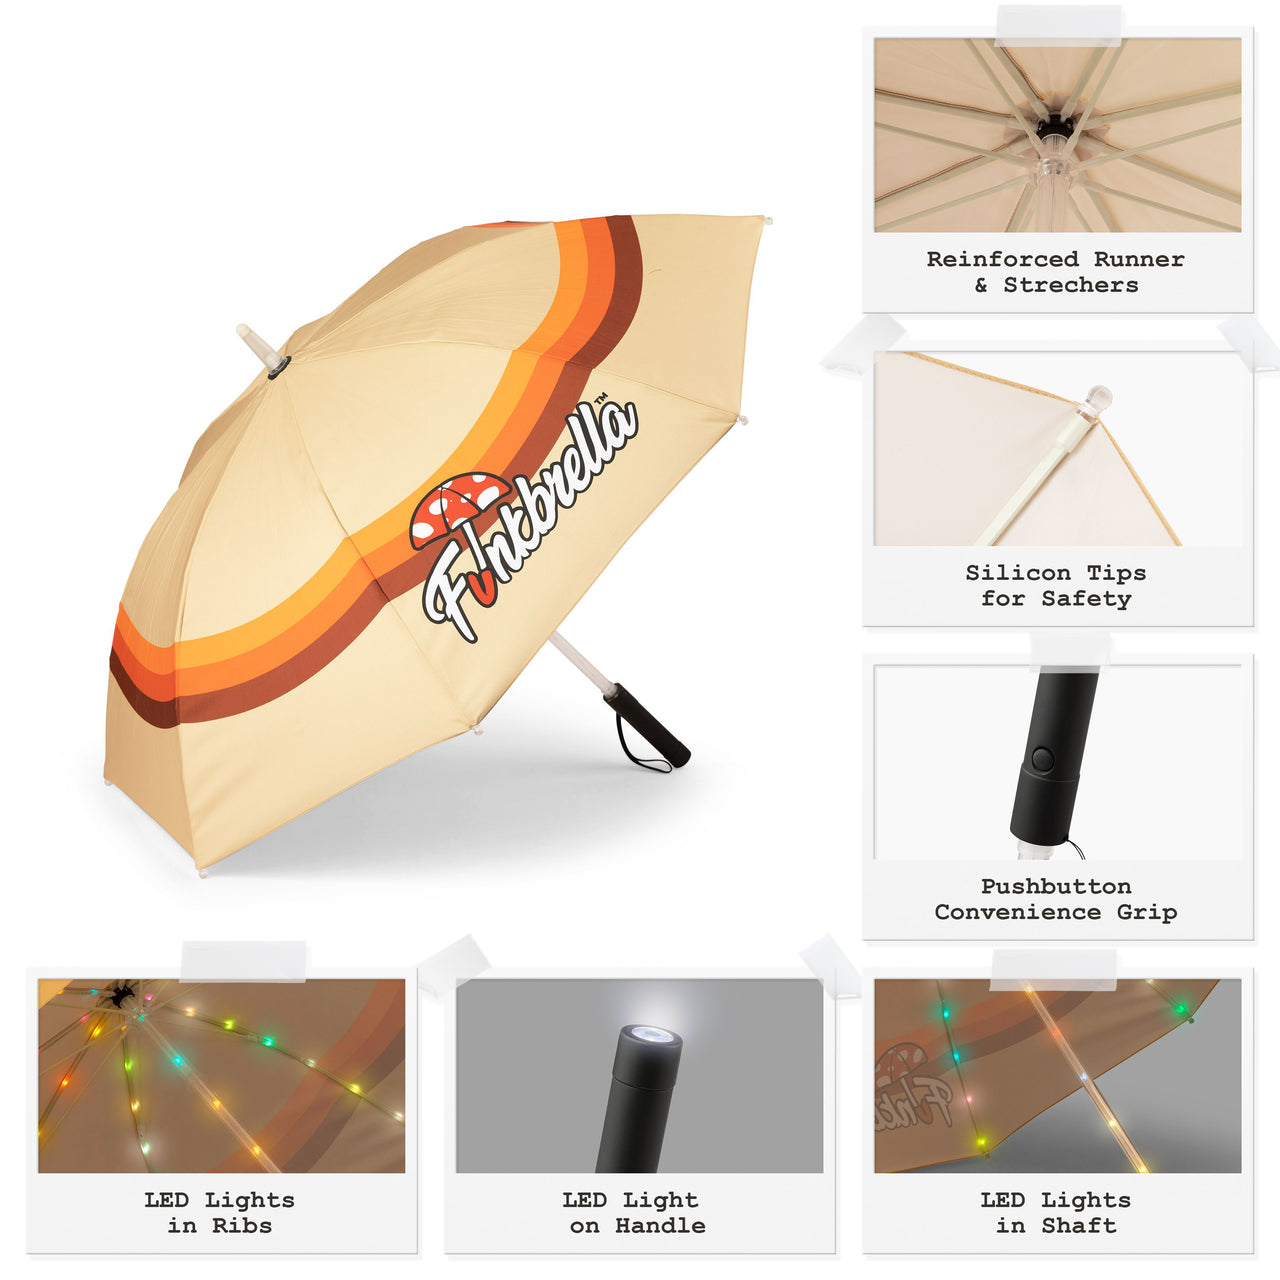 70's Retro LED Umbrella with Multi-Color LED Light Show, Strobe, Fade, Static LED Settings, AAA Batteries, 47” Canopy